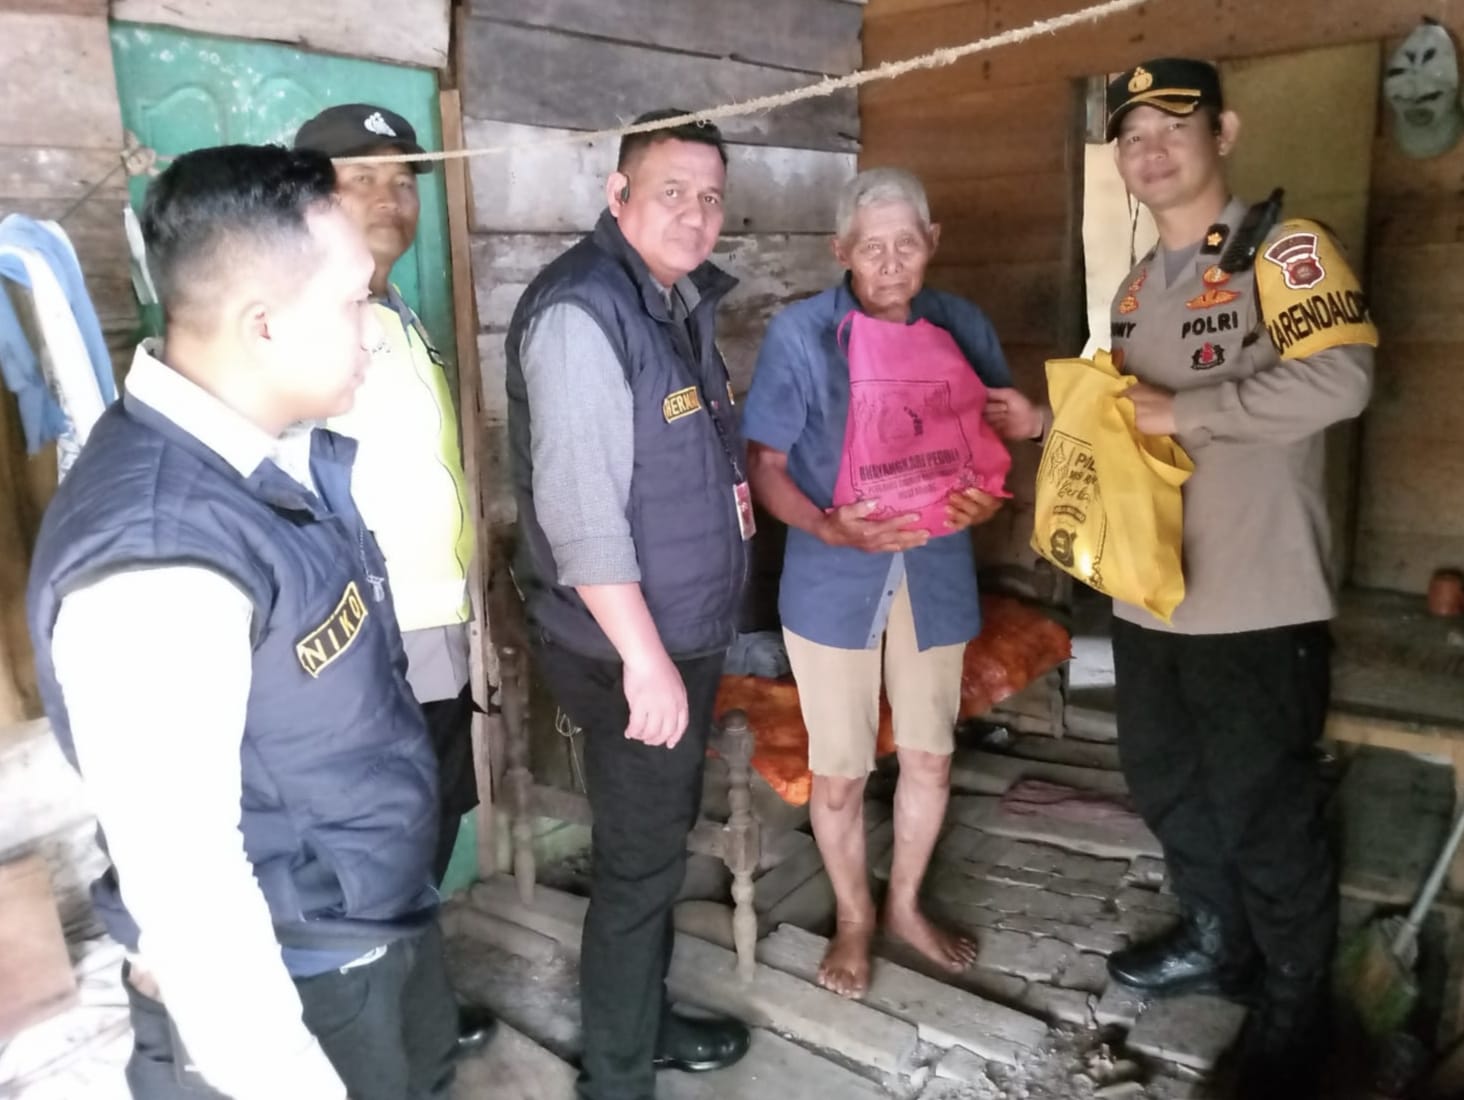 Kapolres dan Wakapolres Musi Rawas Turun Langsung ke Rumah Warga Kurang Mampu Berikan Bansos, Pak Kapolres Terima Kasih